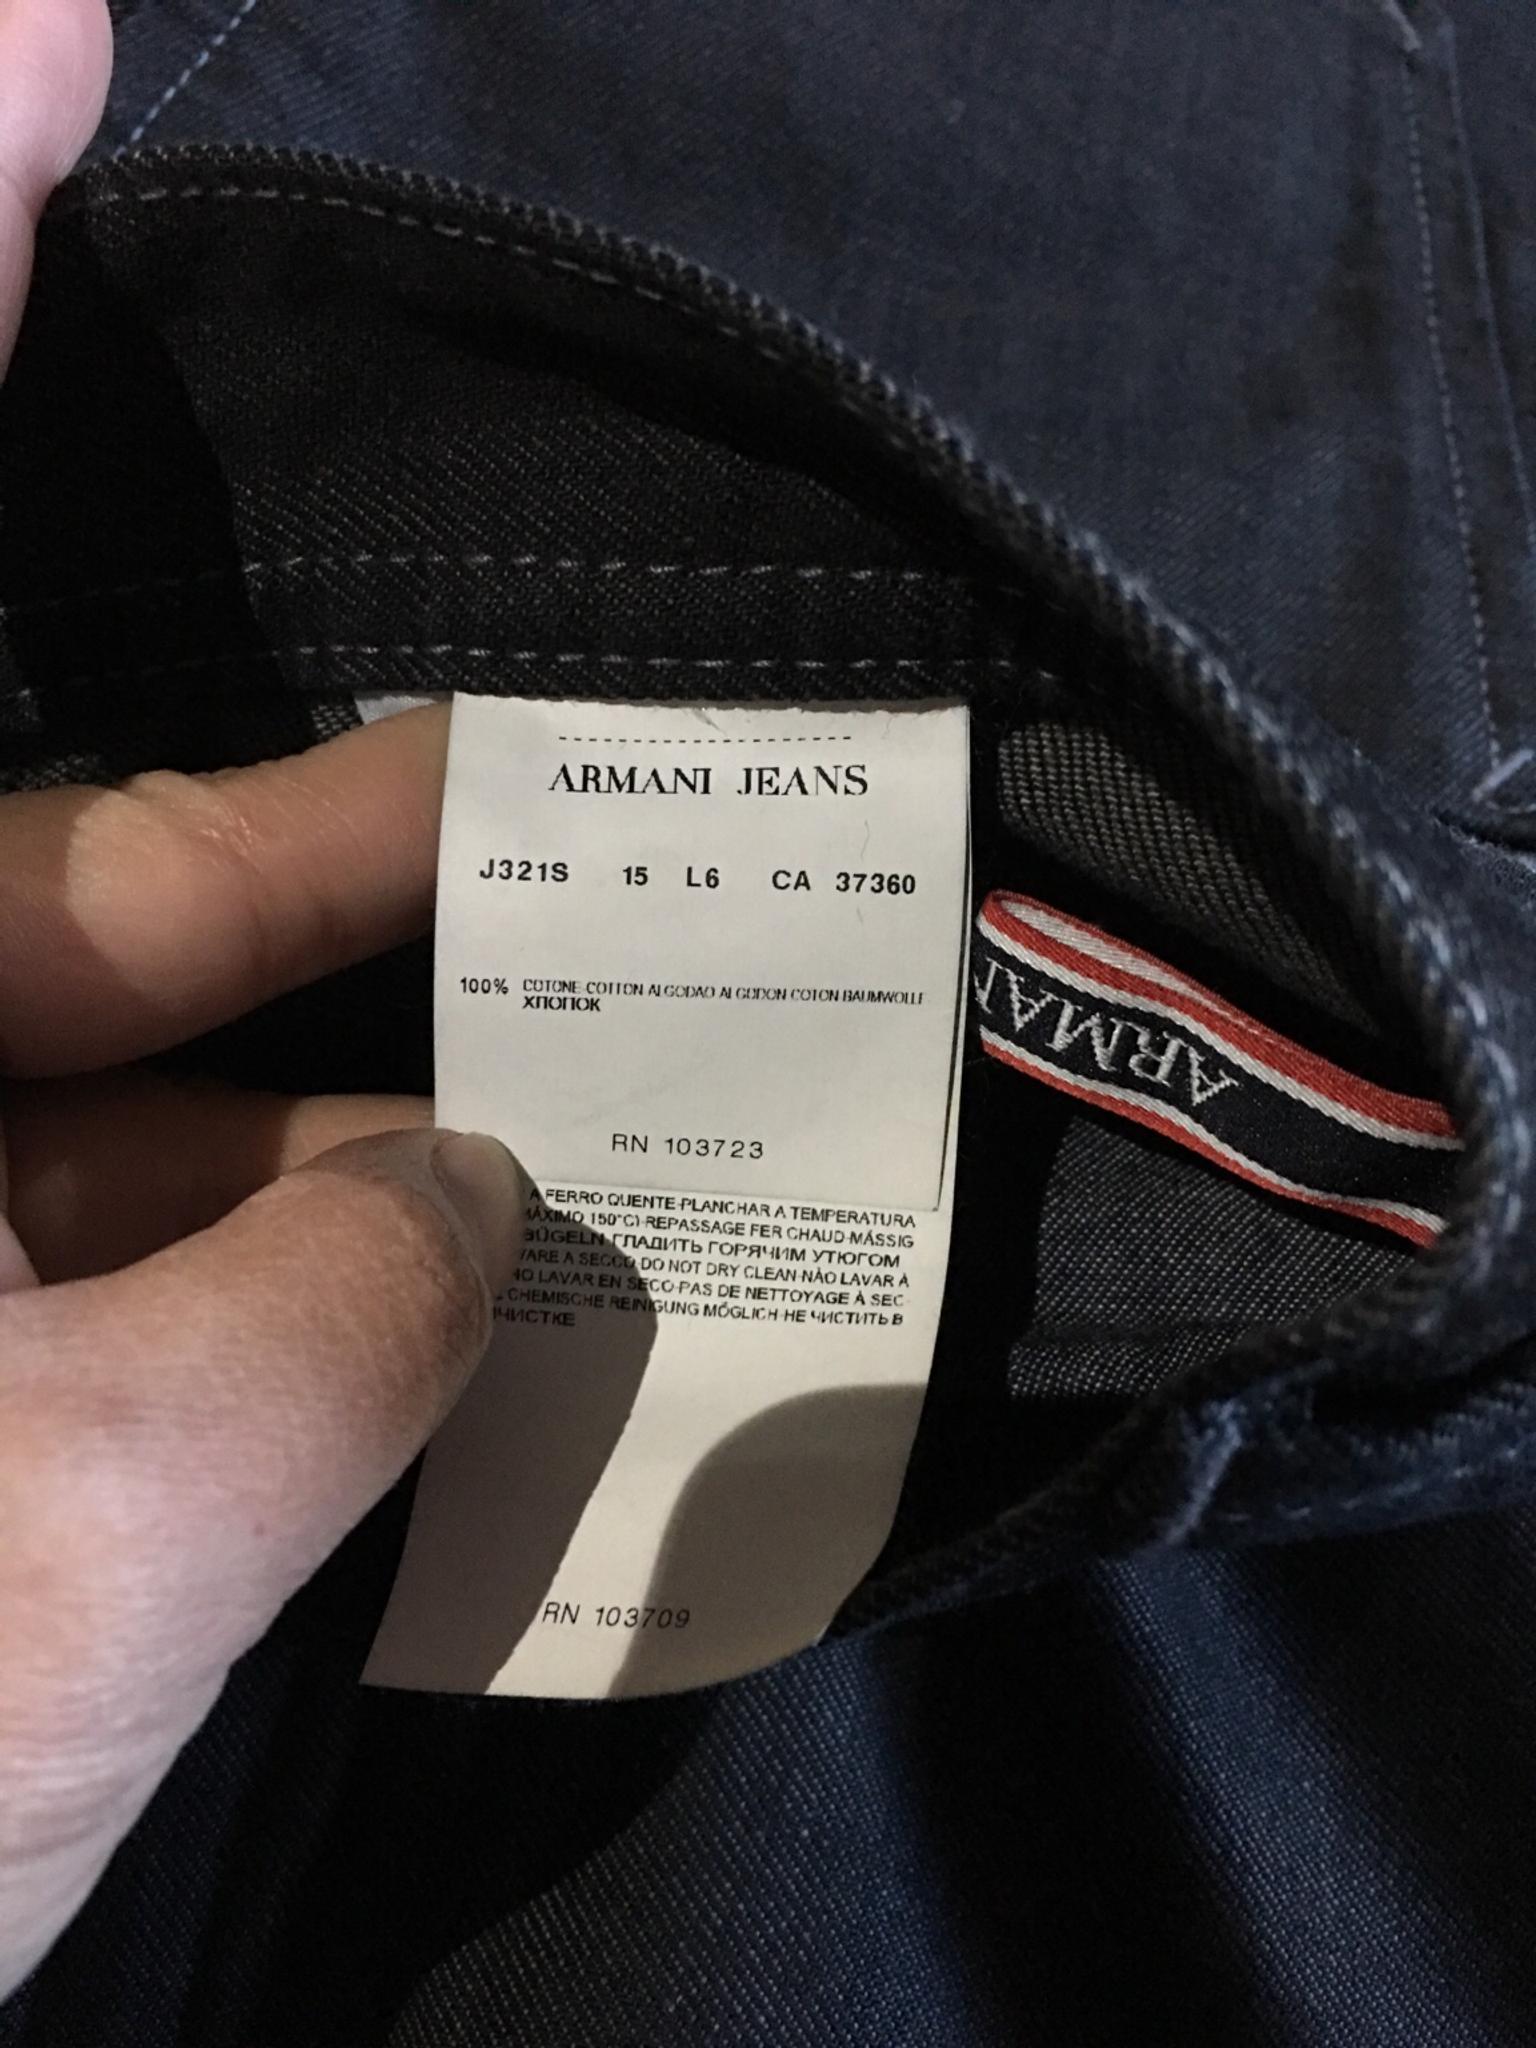 armani jeans ca 37360 jacket